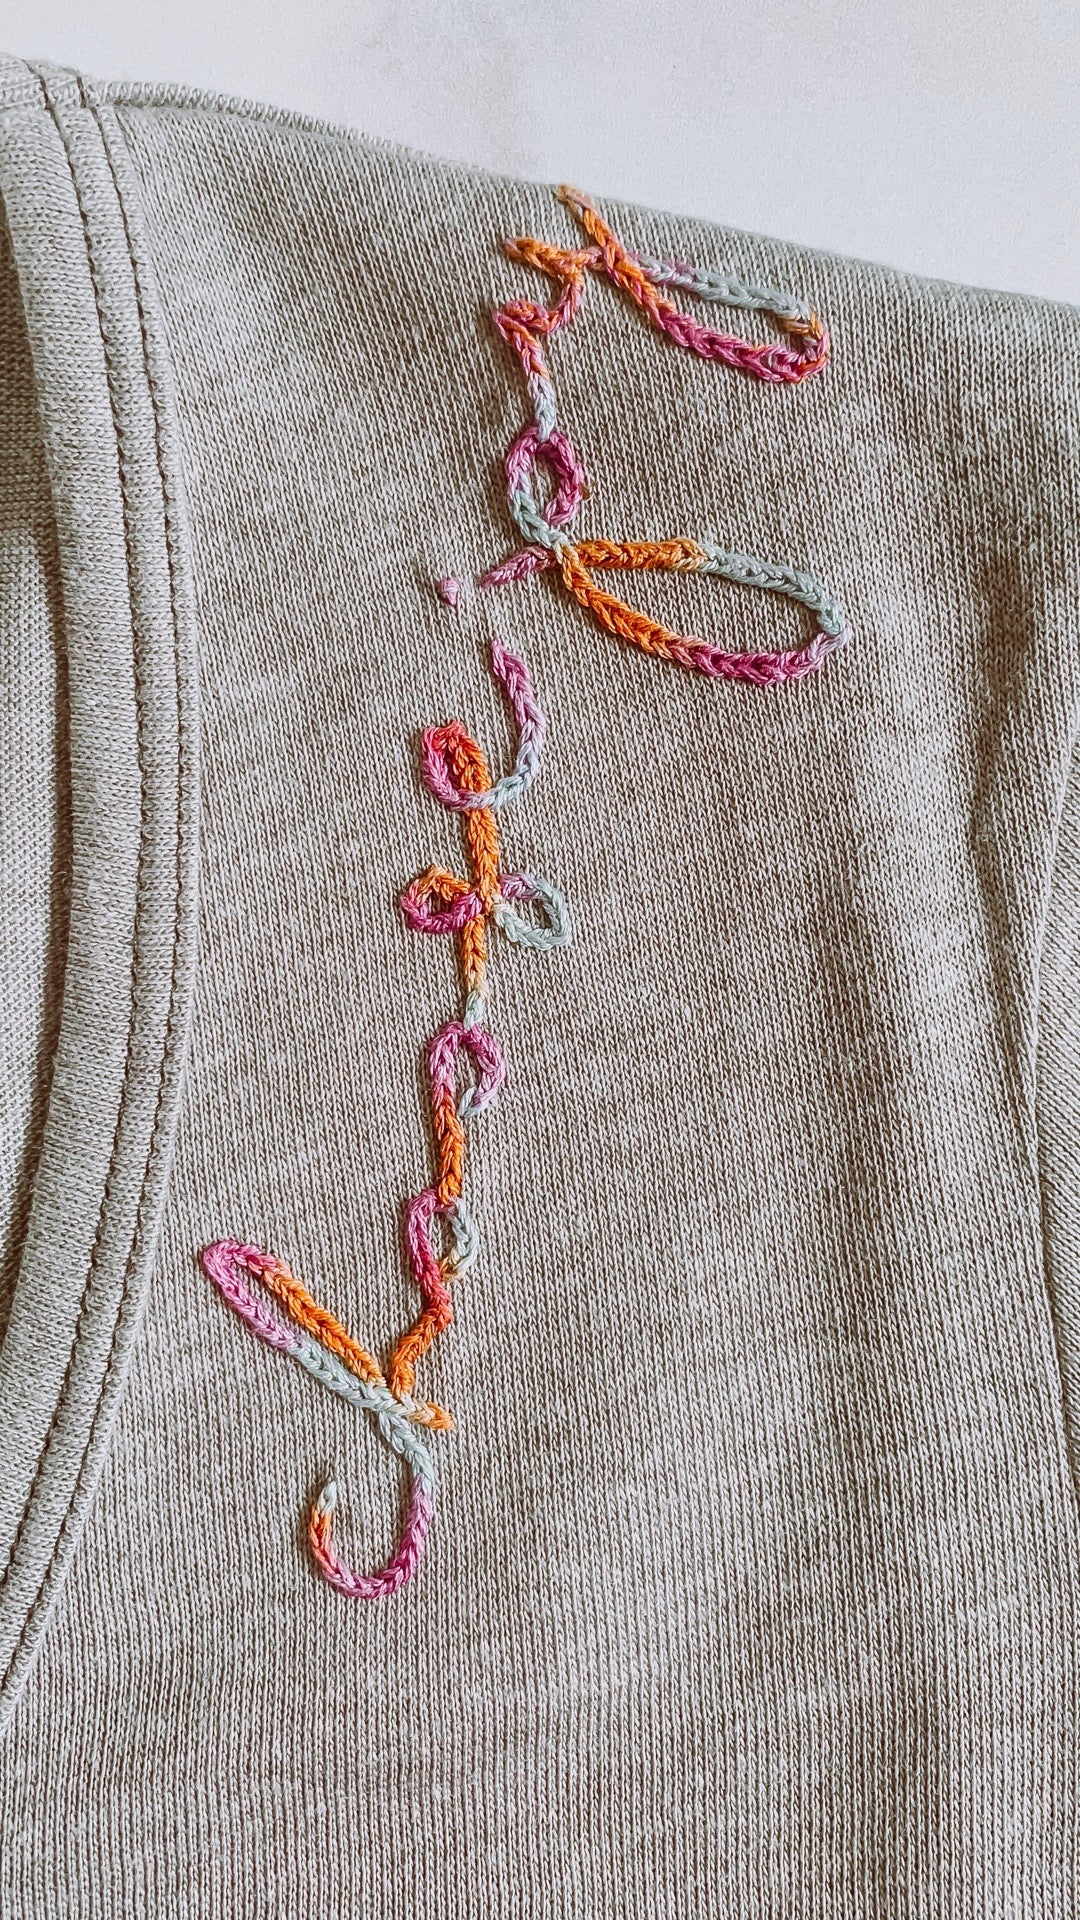 Hand Embroidery Customization